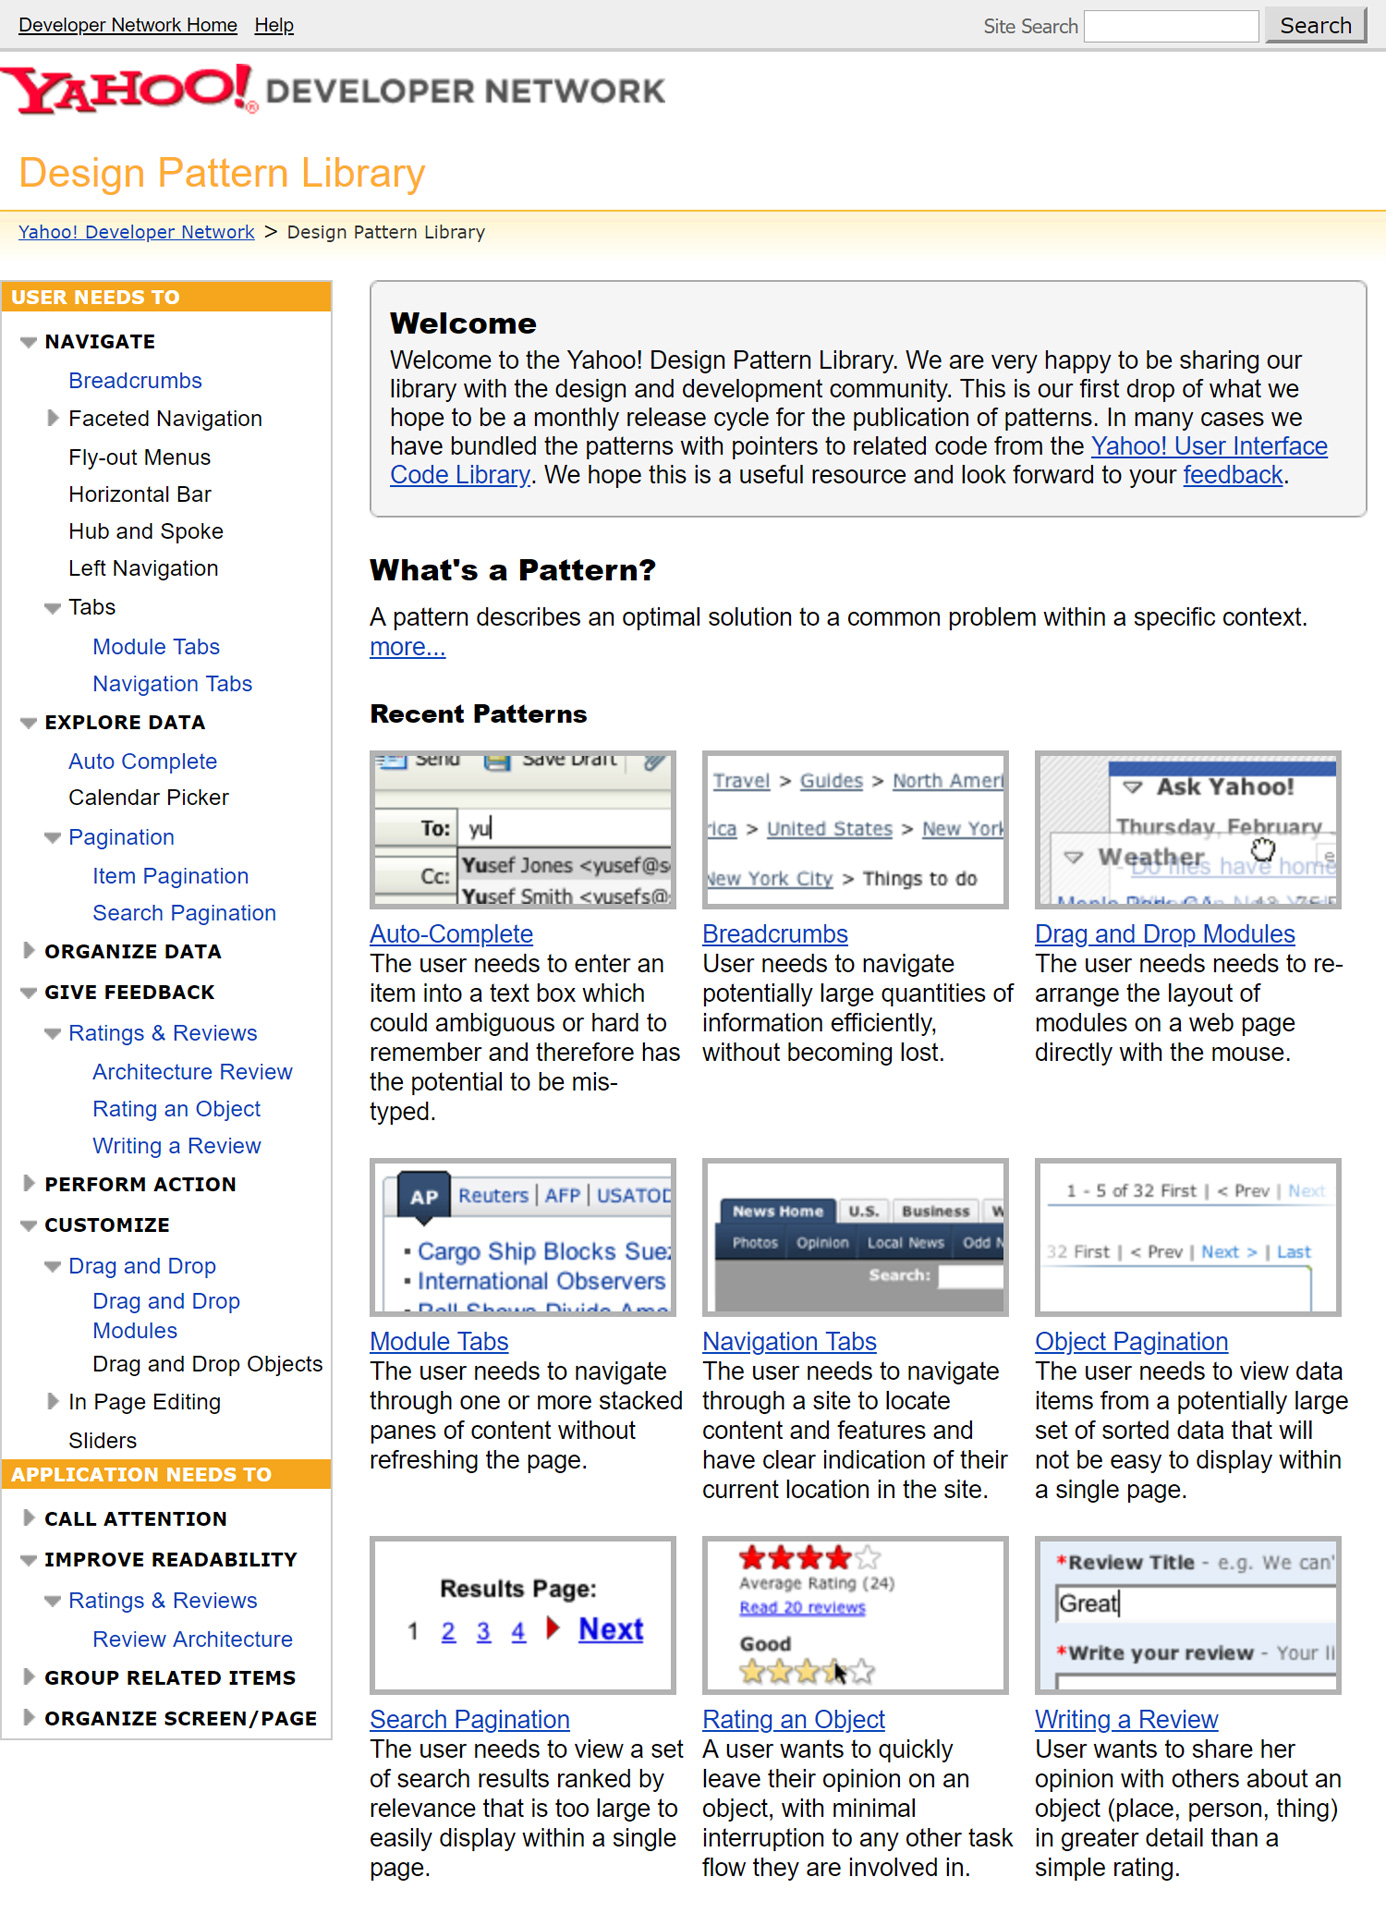 Yahoo! Design Pattern Library Homepage